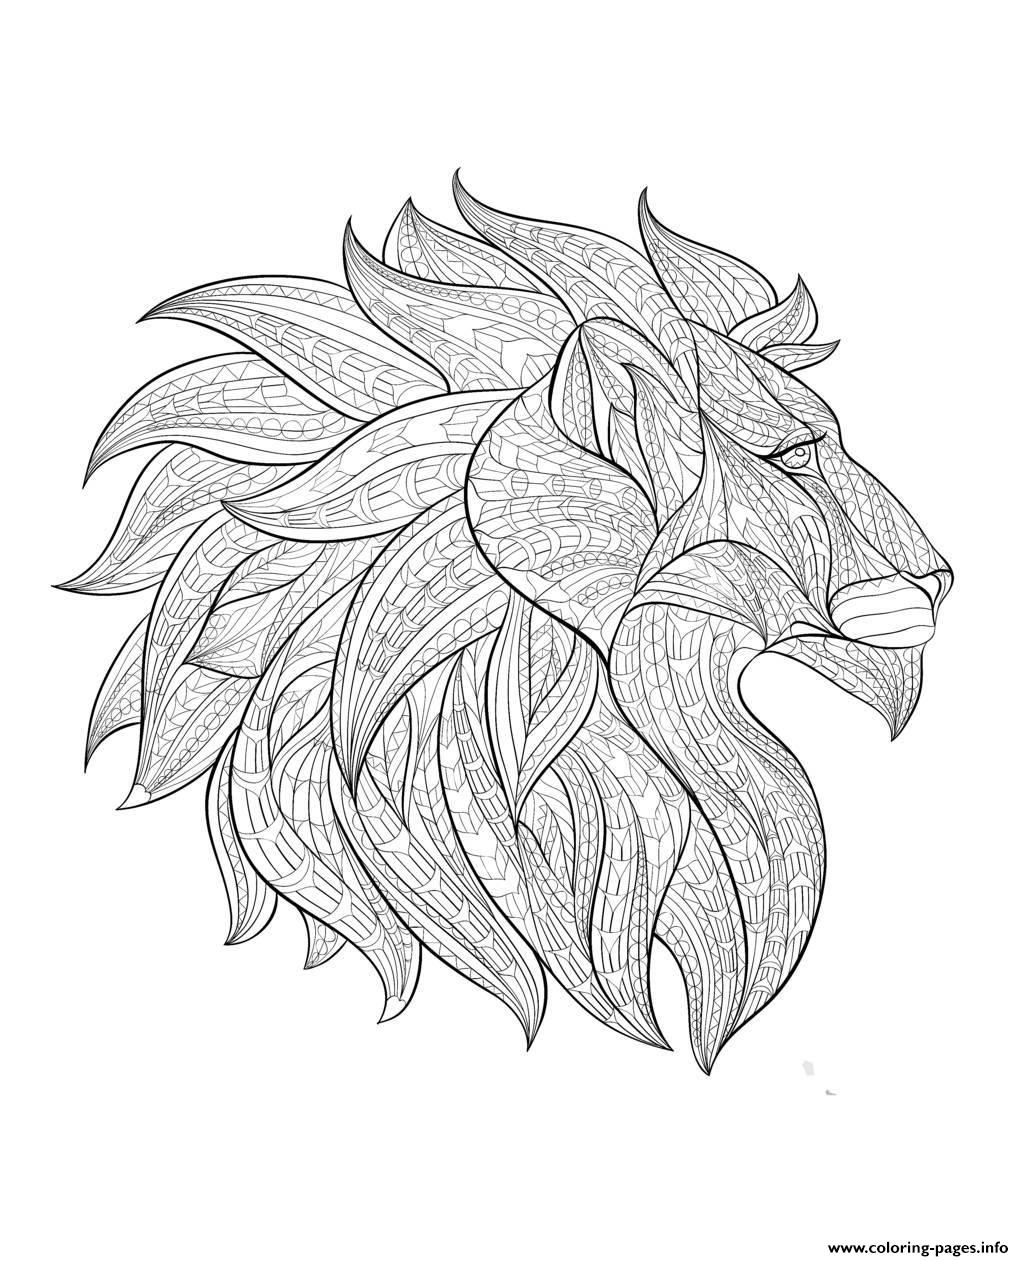 Adult Lion Head Profile coloring pages